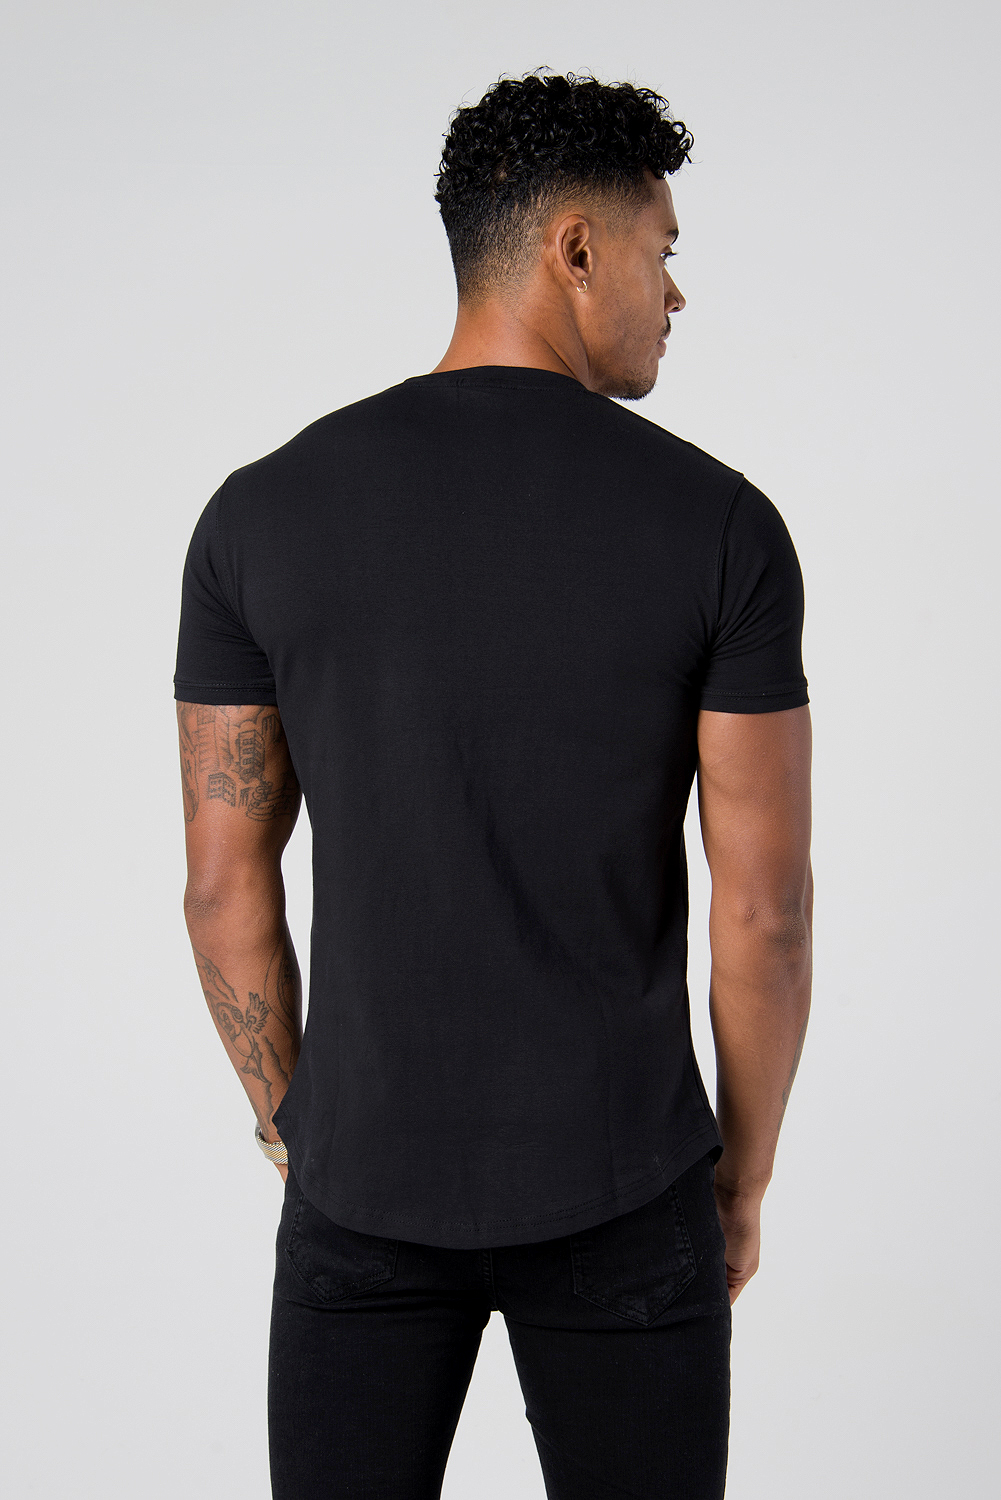 Vox Gentè Noir Longline Fitted T-Shirt - Vox Gentè